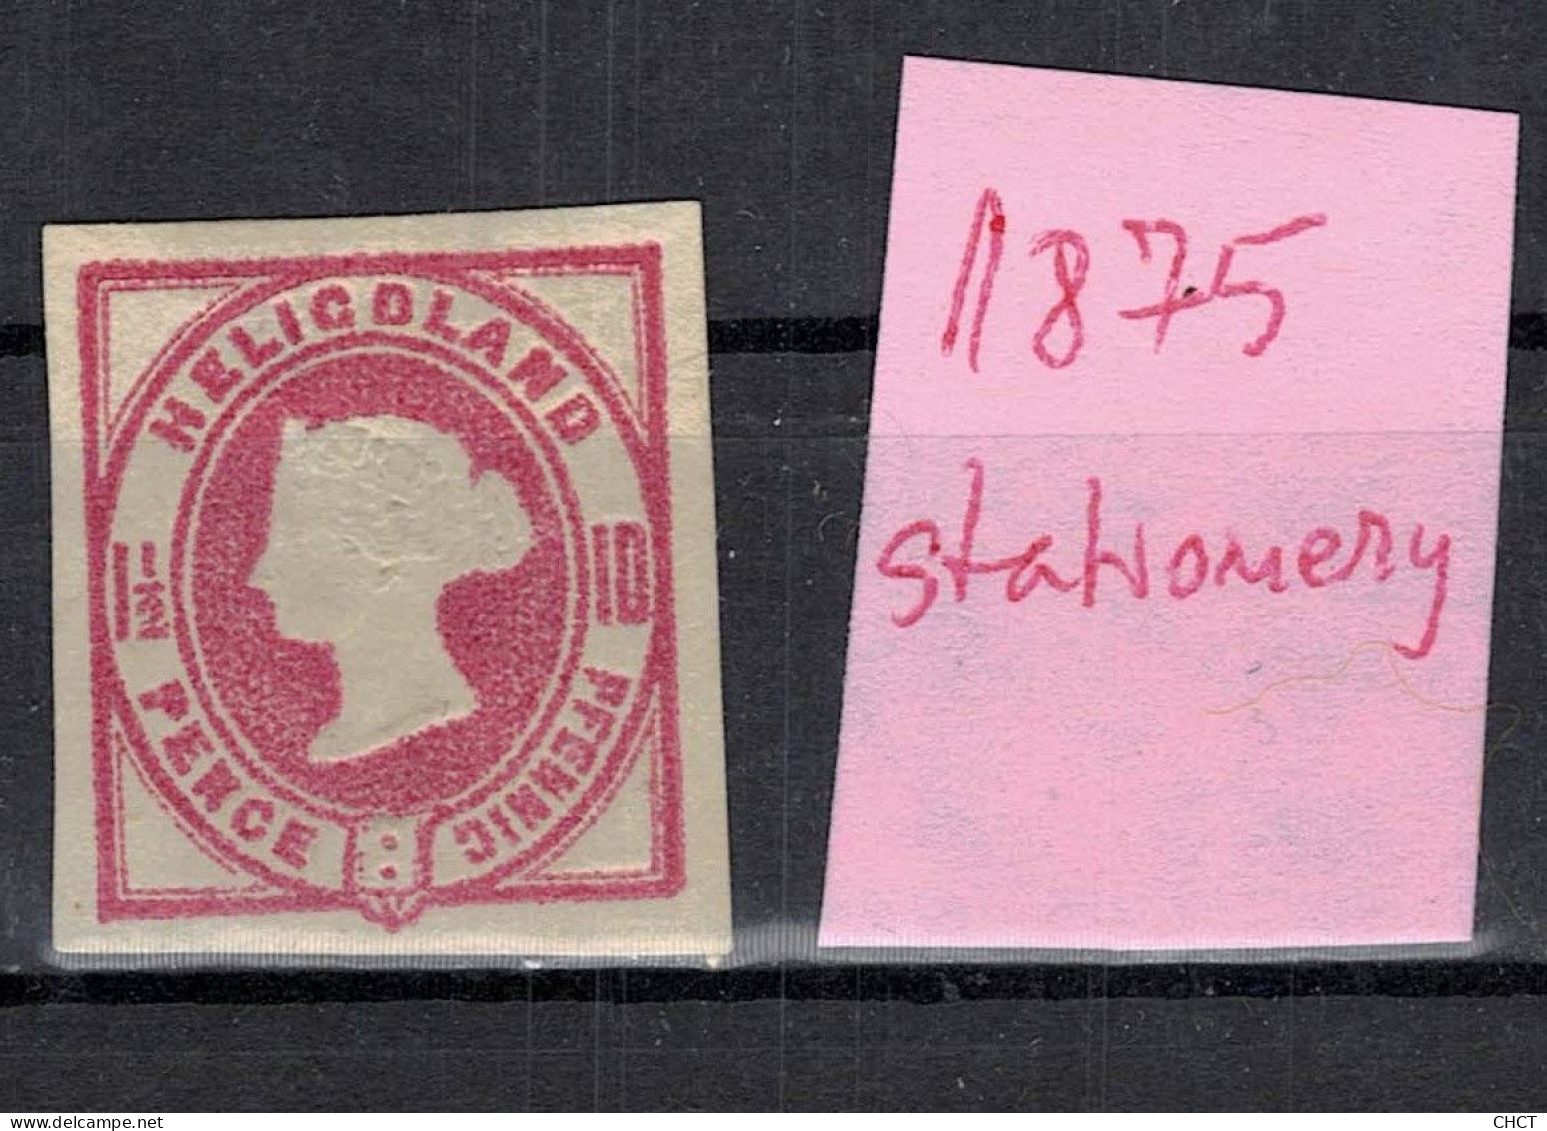 CHCT9 - 1 1/2 Pence, Stationery Cut Out, 1875, Helgoland, Heligoland, Germany - Heligoland